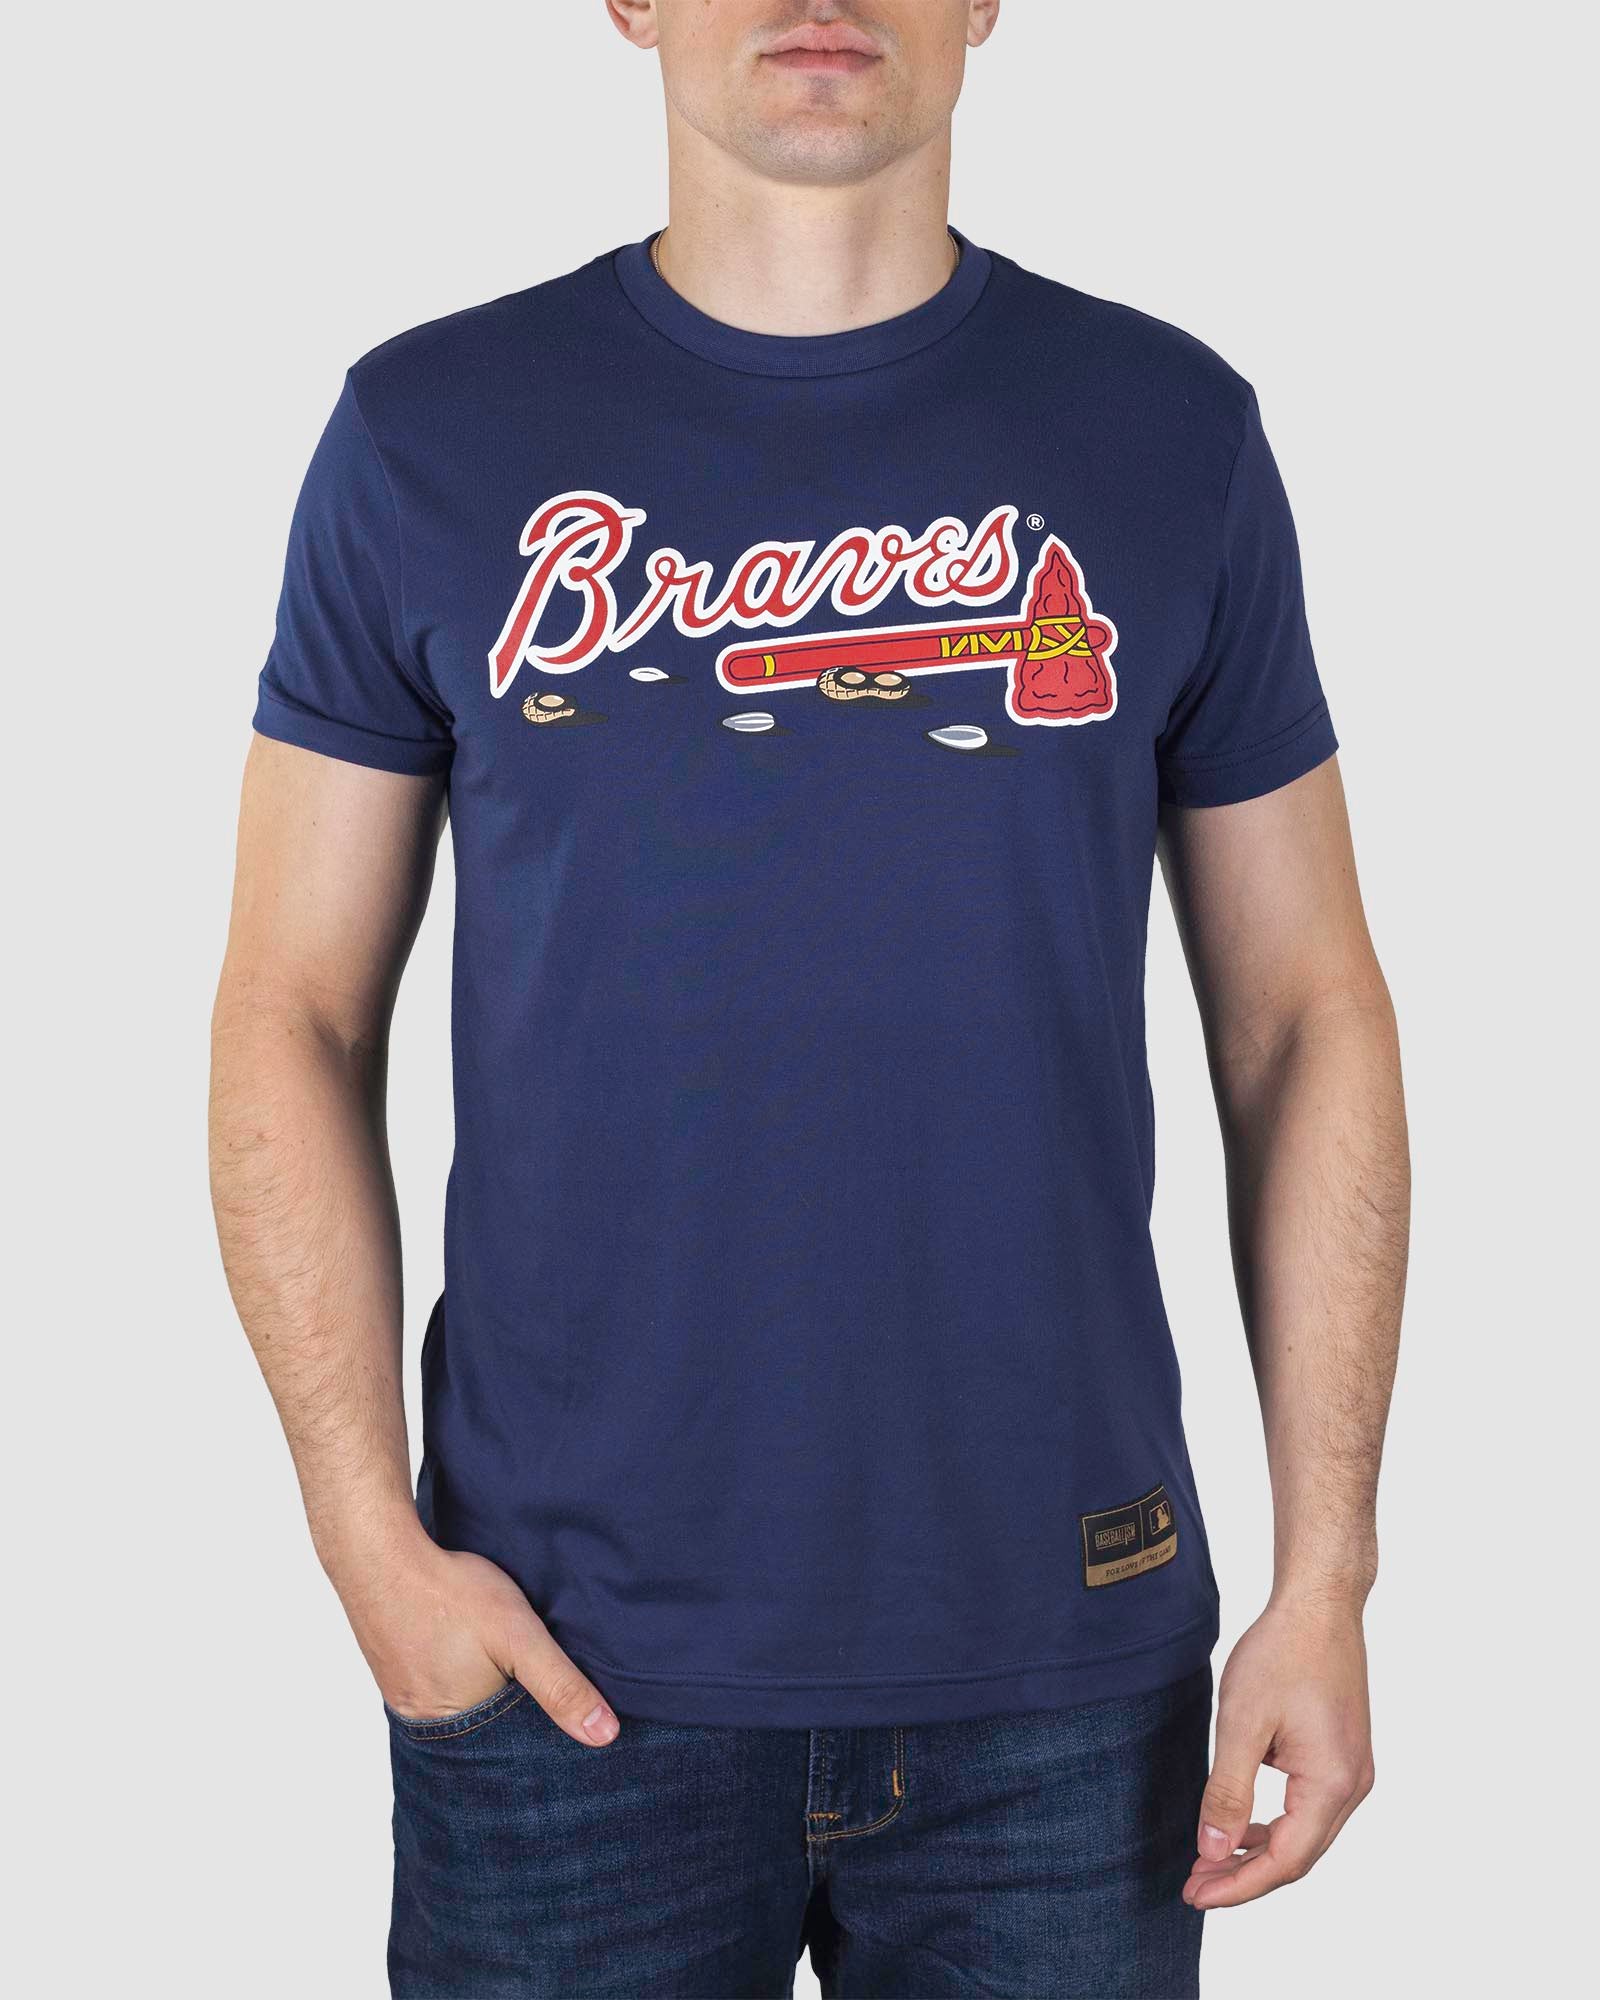 Baseballism Get Your Peanuts! - Atlanta Braves 2XL